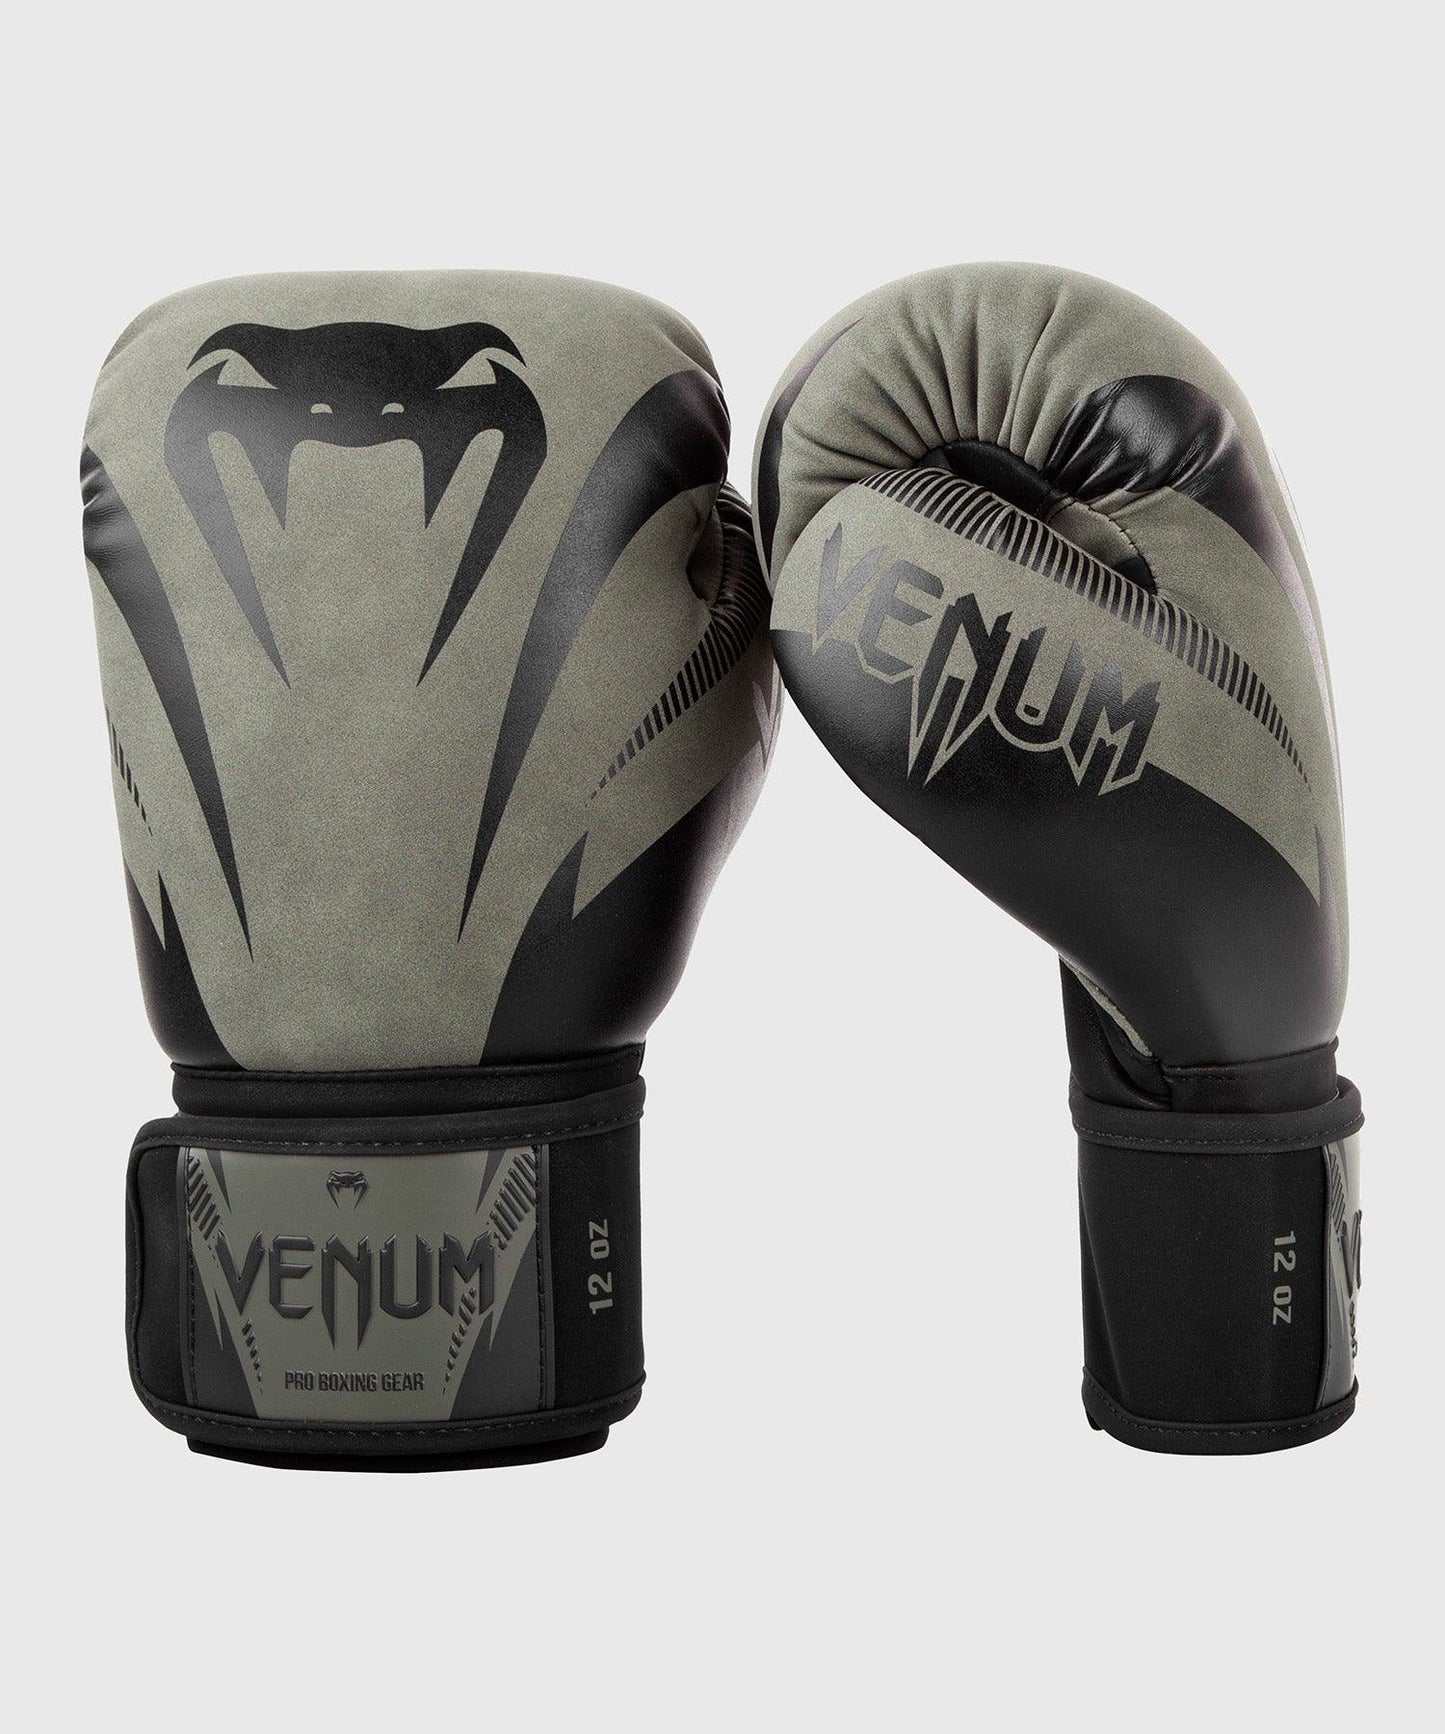 Venum Impact Boxing Gloves